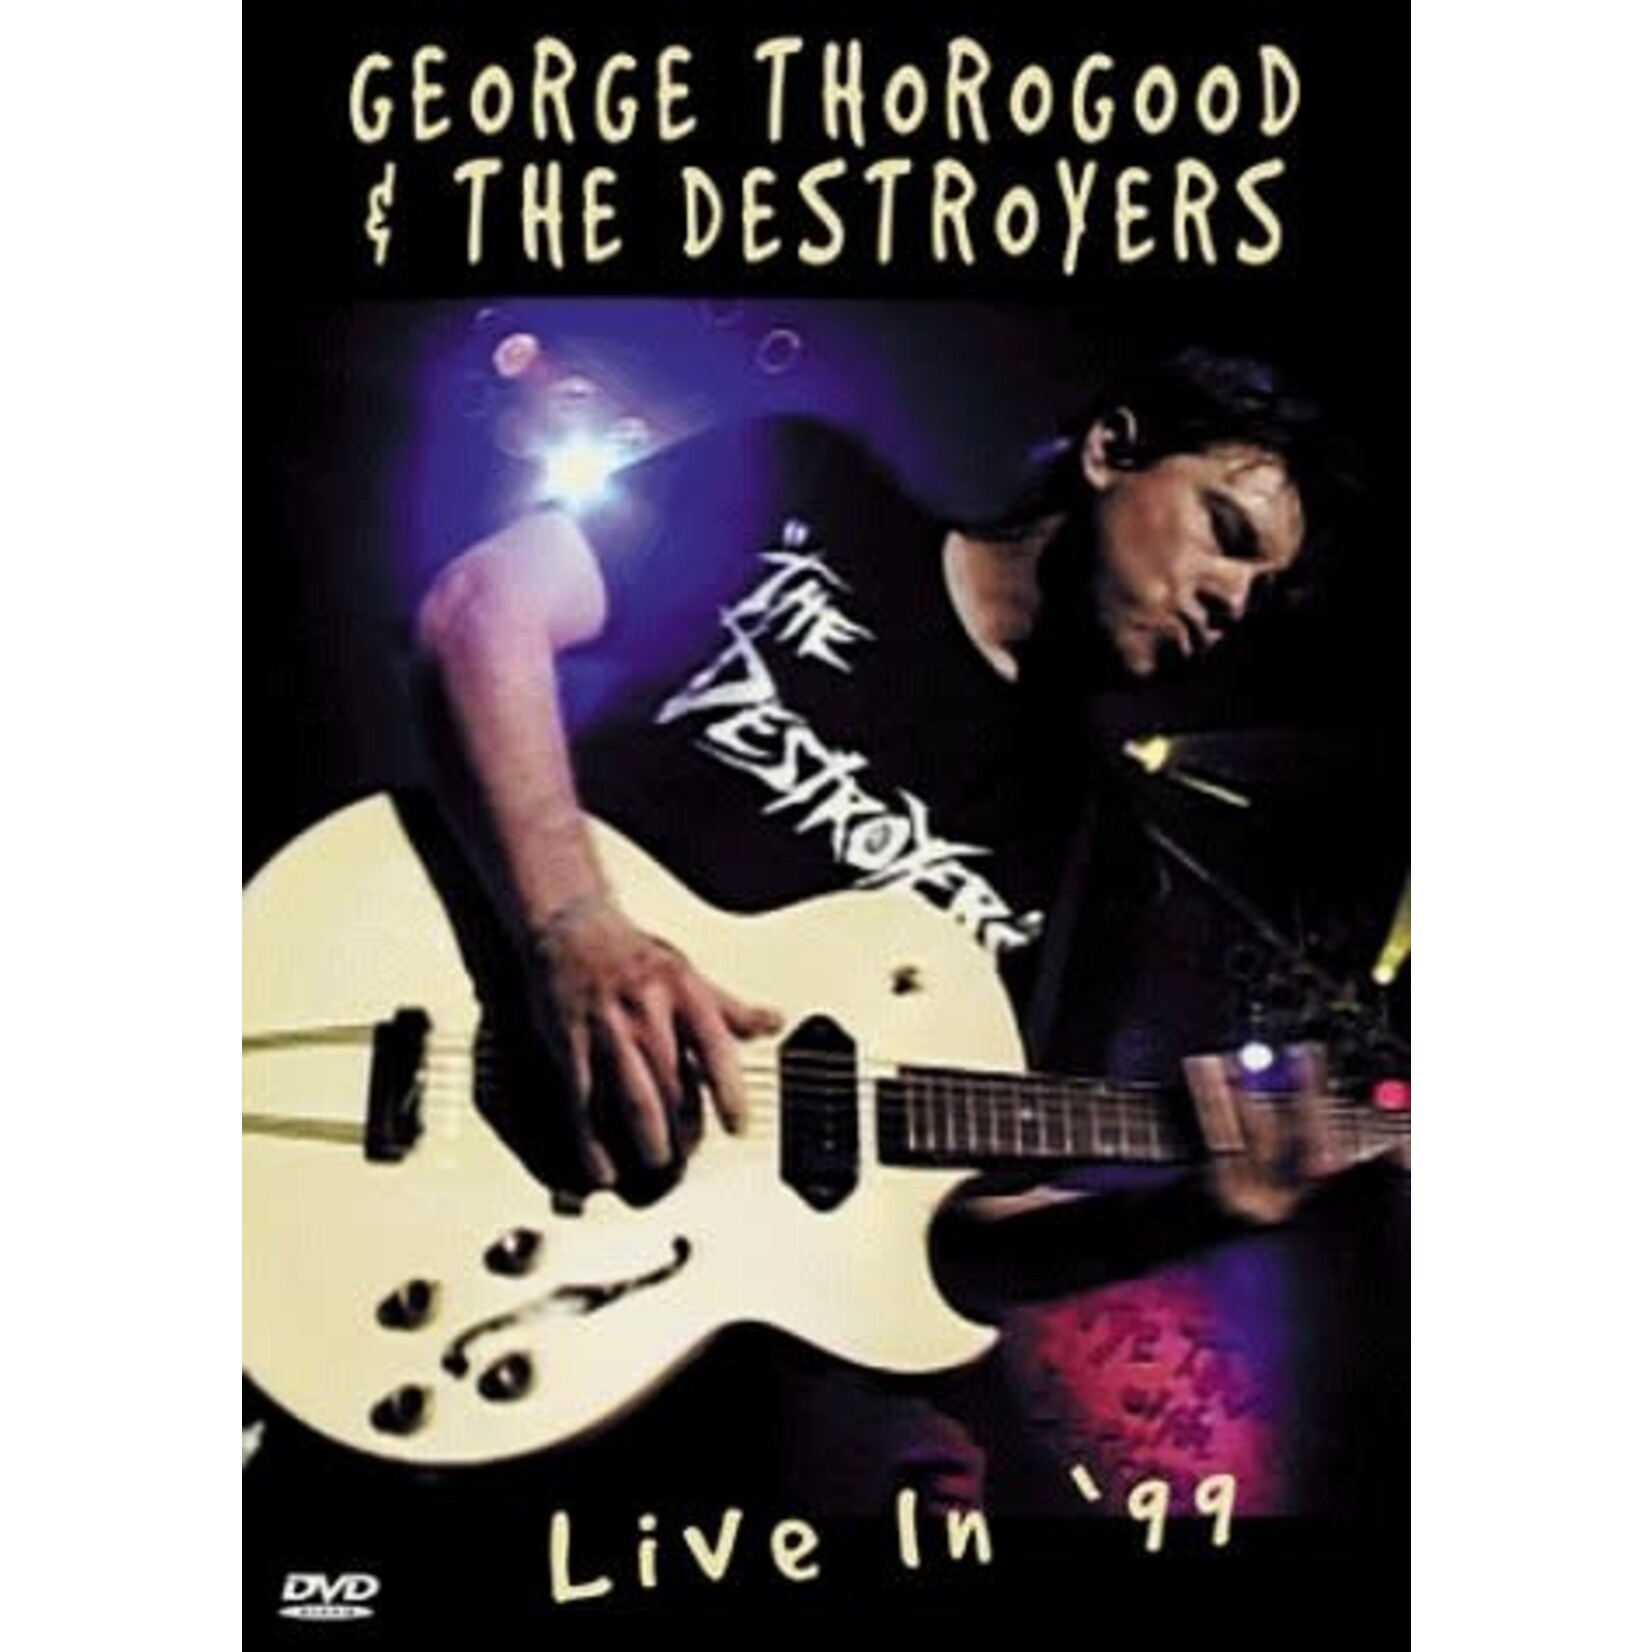 George Thorogood - Live In '99 [USED DVD]